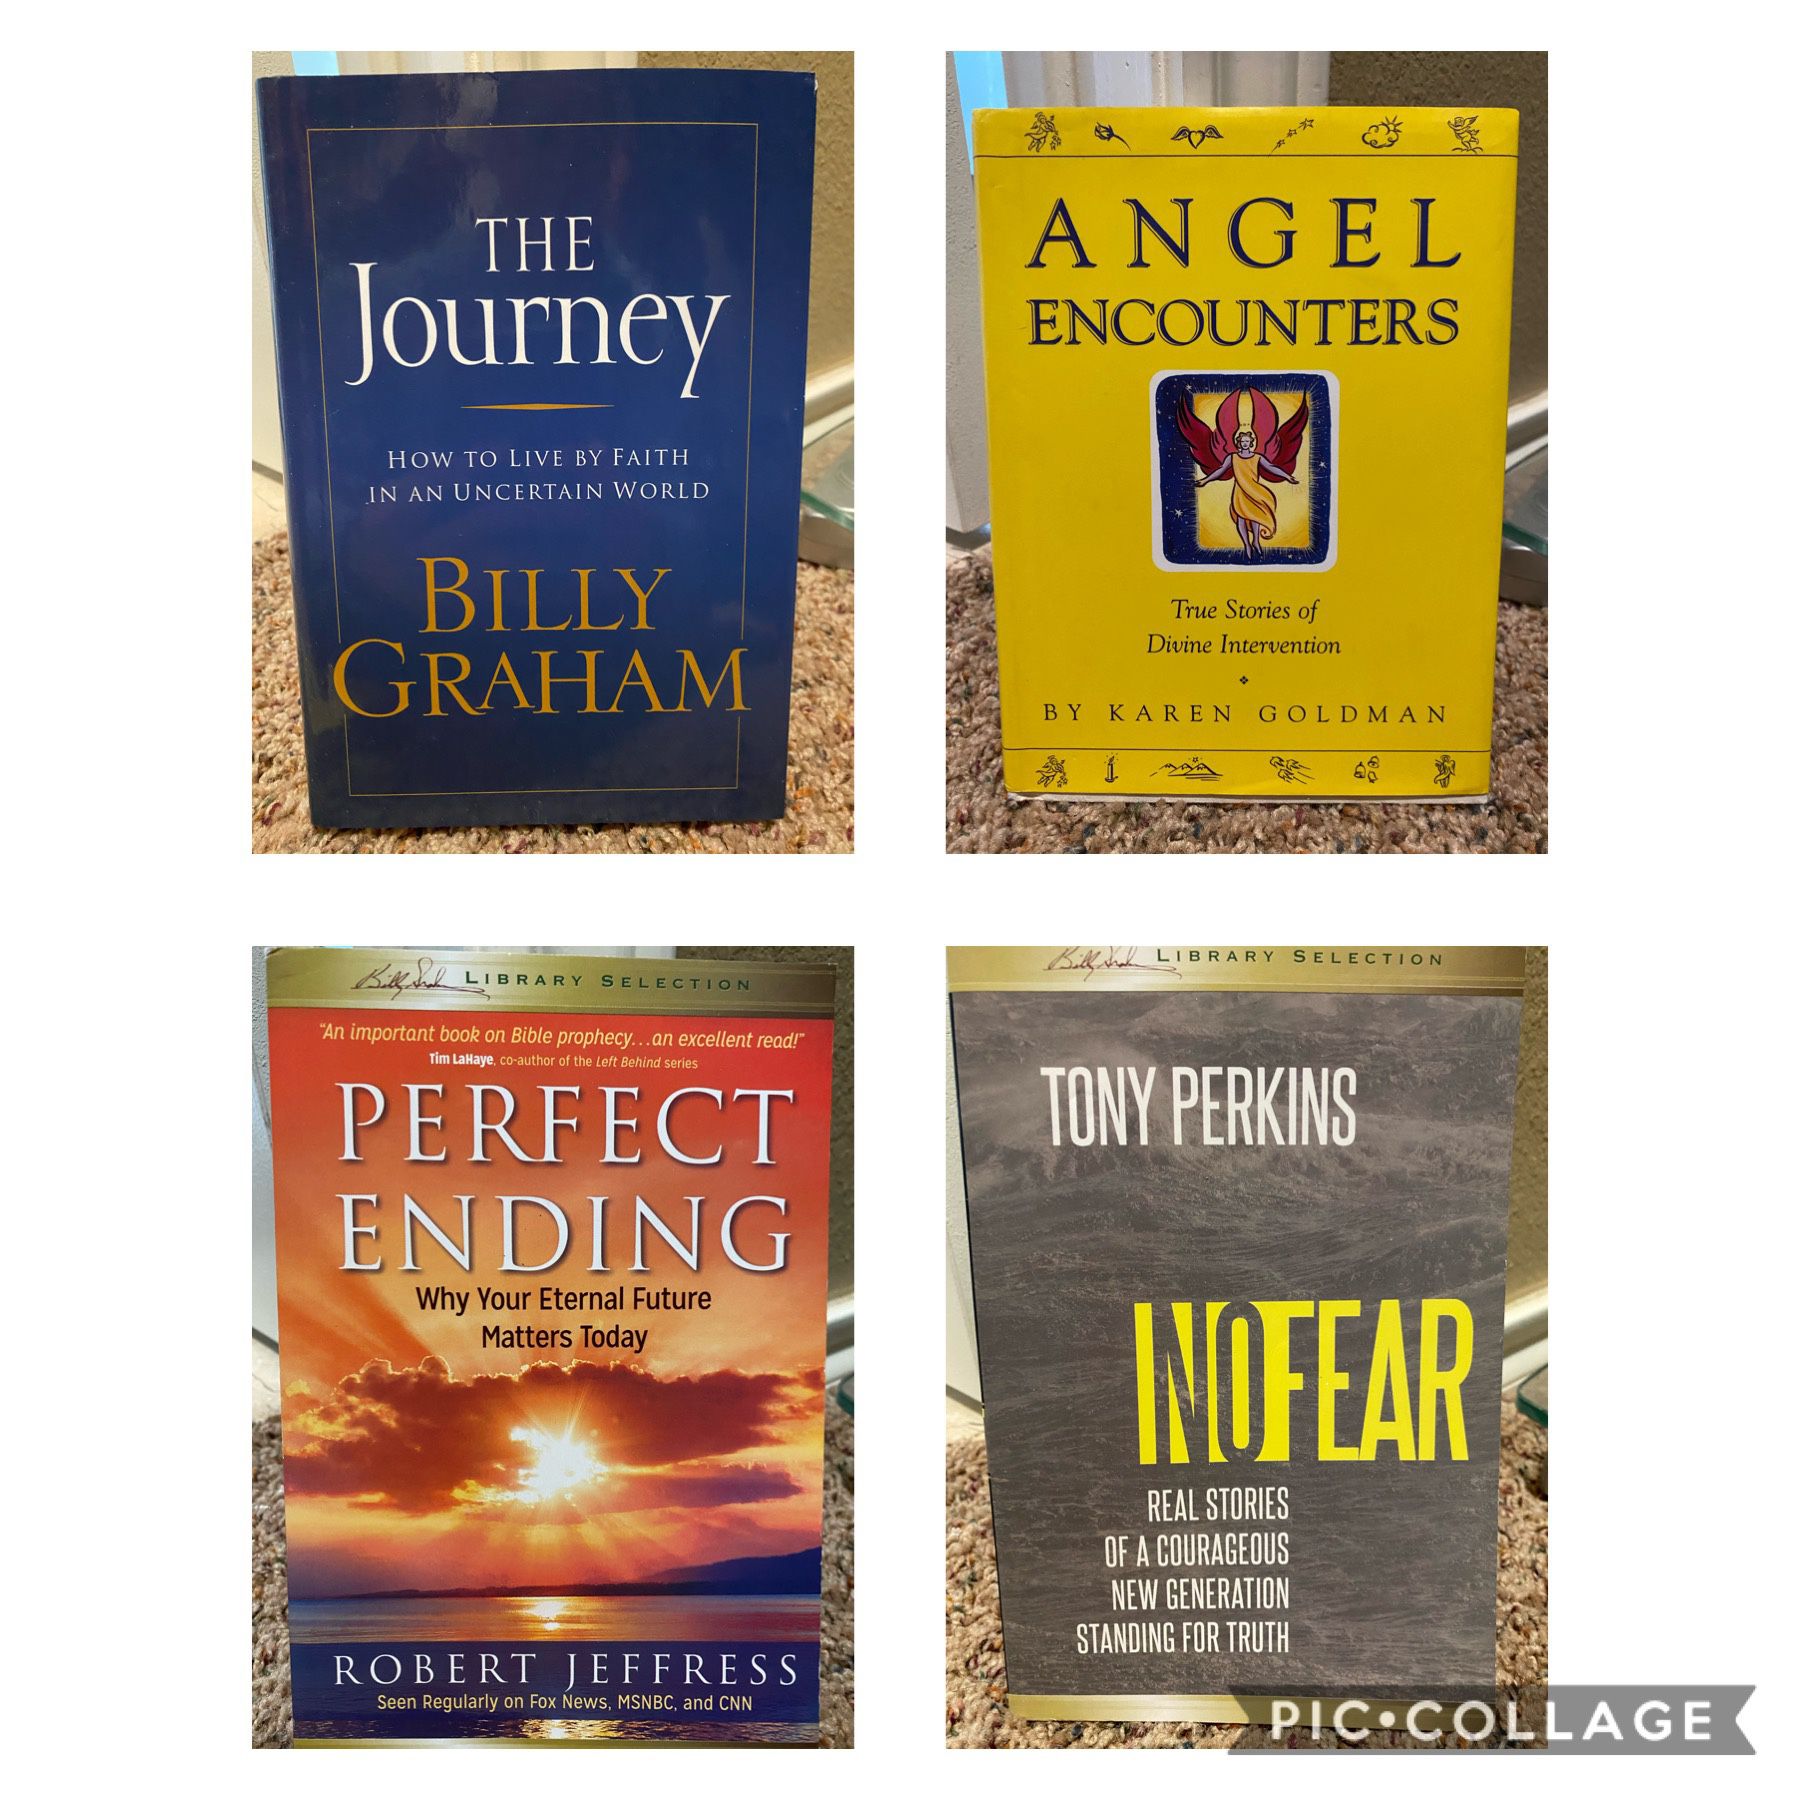 Set of 4 Christian books